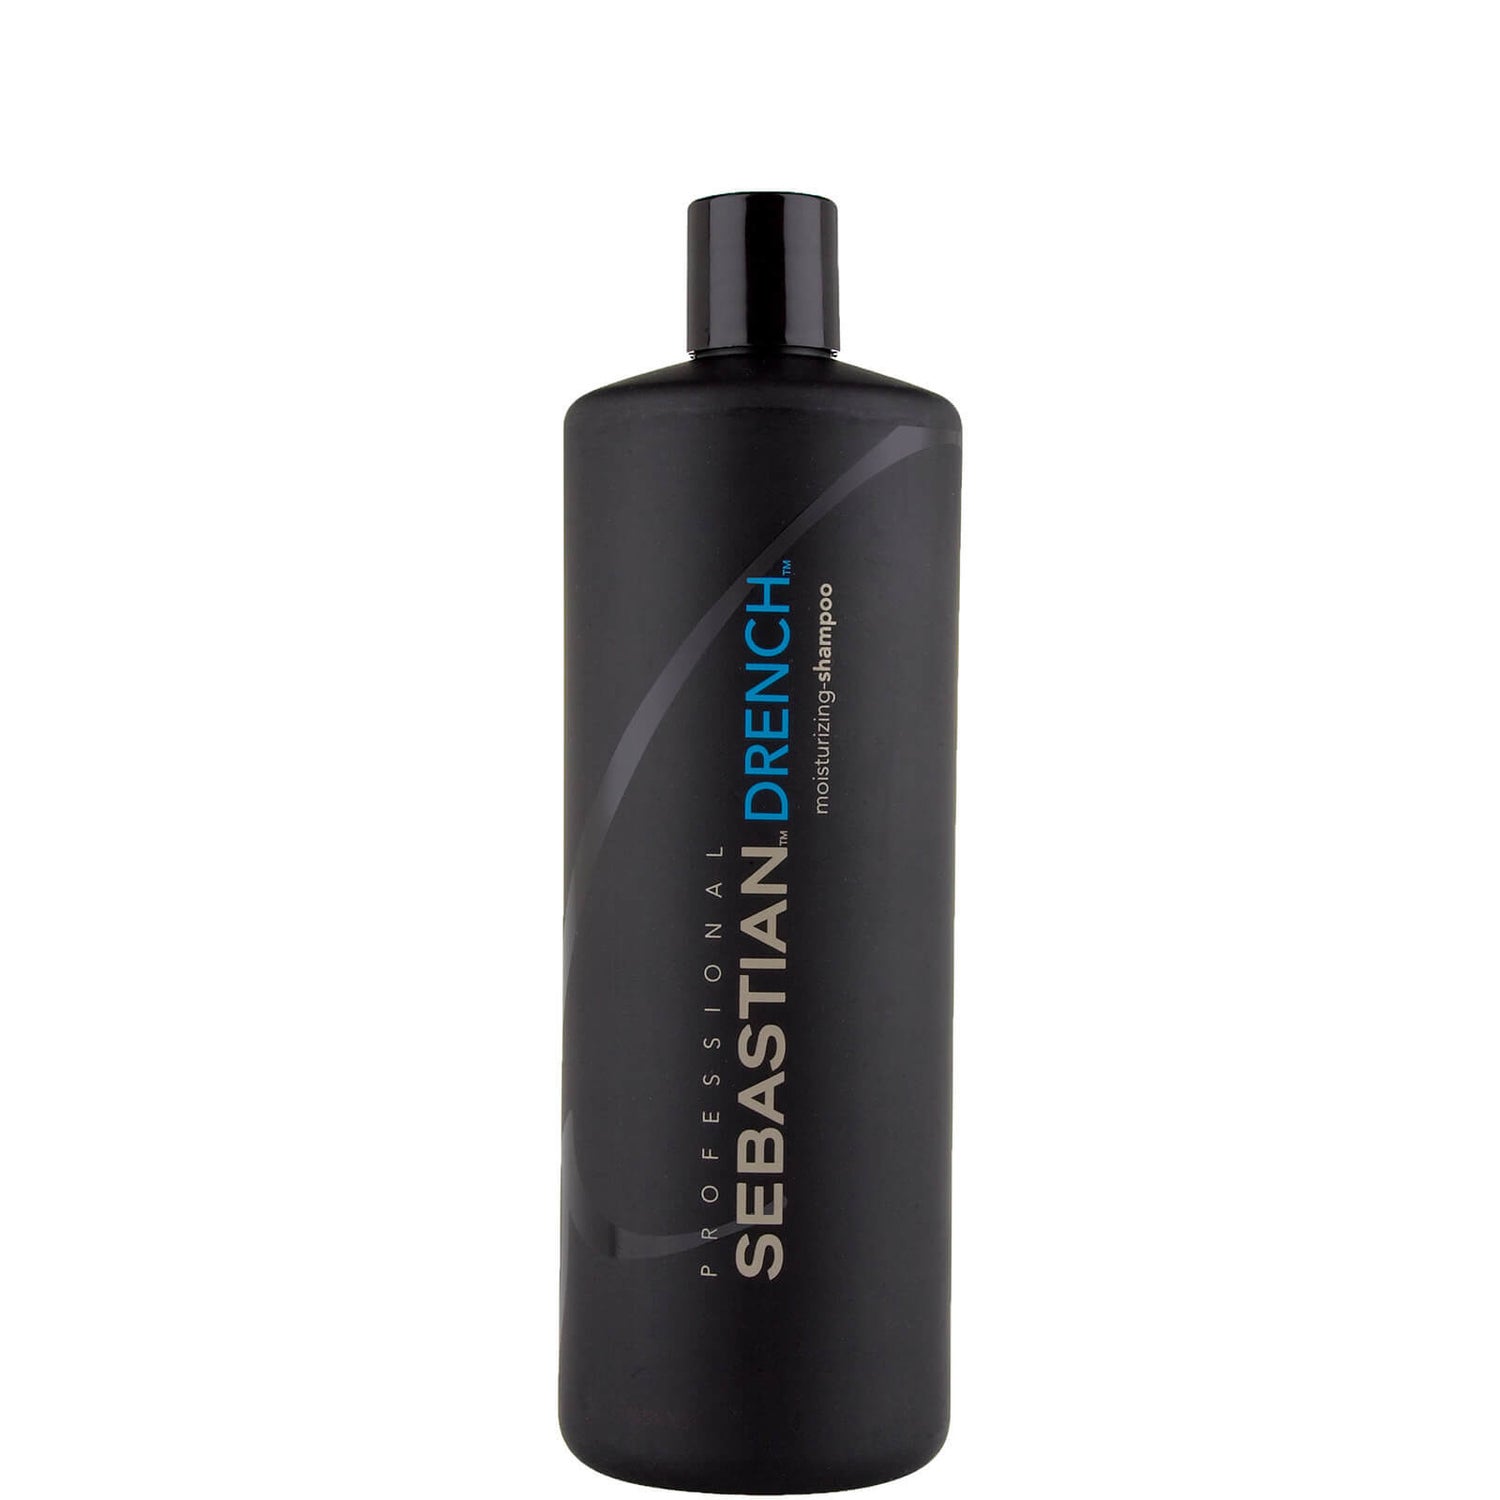 Sebastian Professional Drench Shampoo 33.8 oz